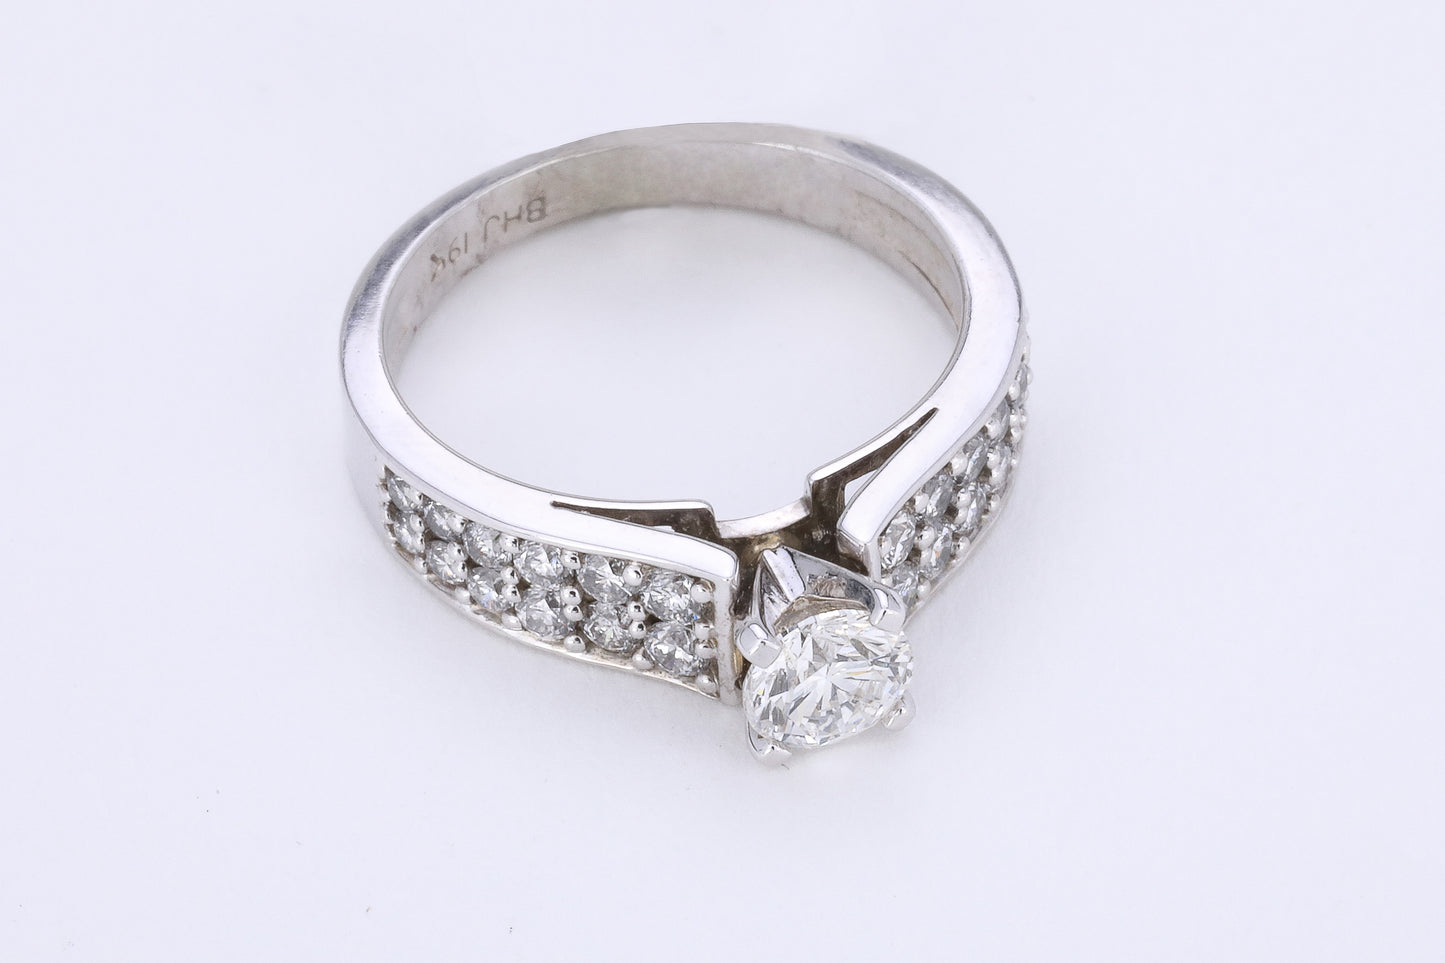 19k White Gold 1.7 ctw Diamond Engagement Ring